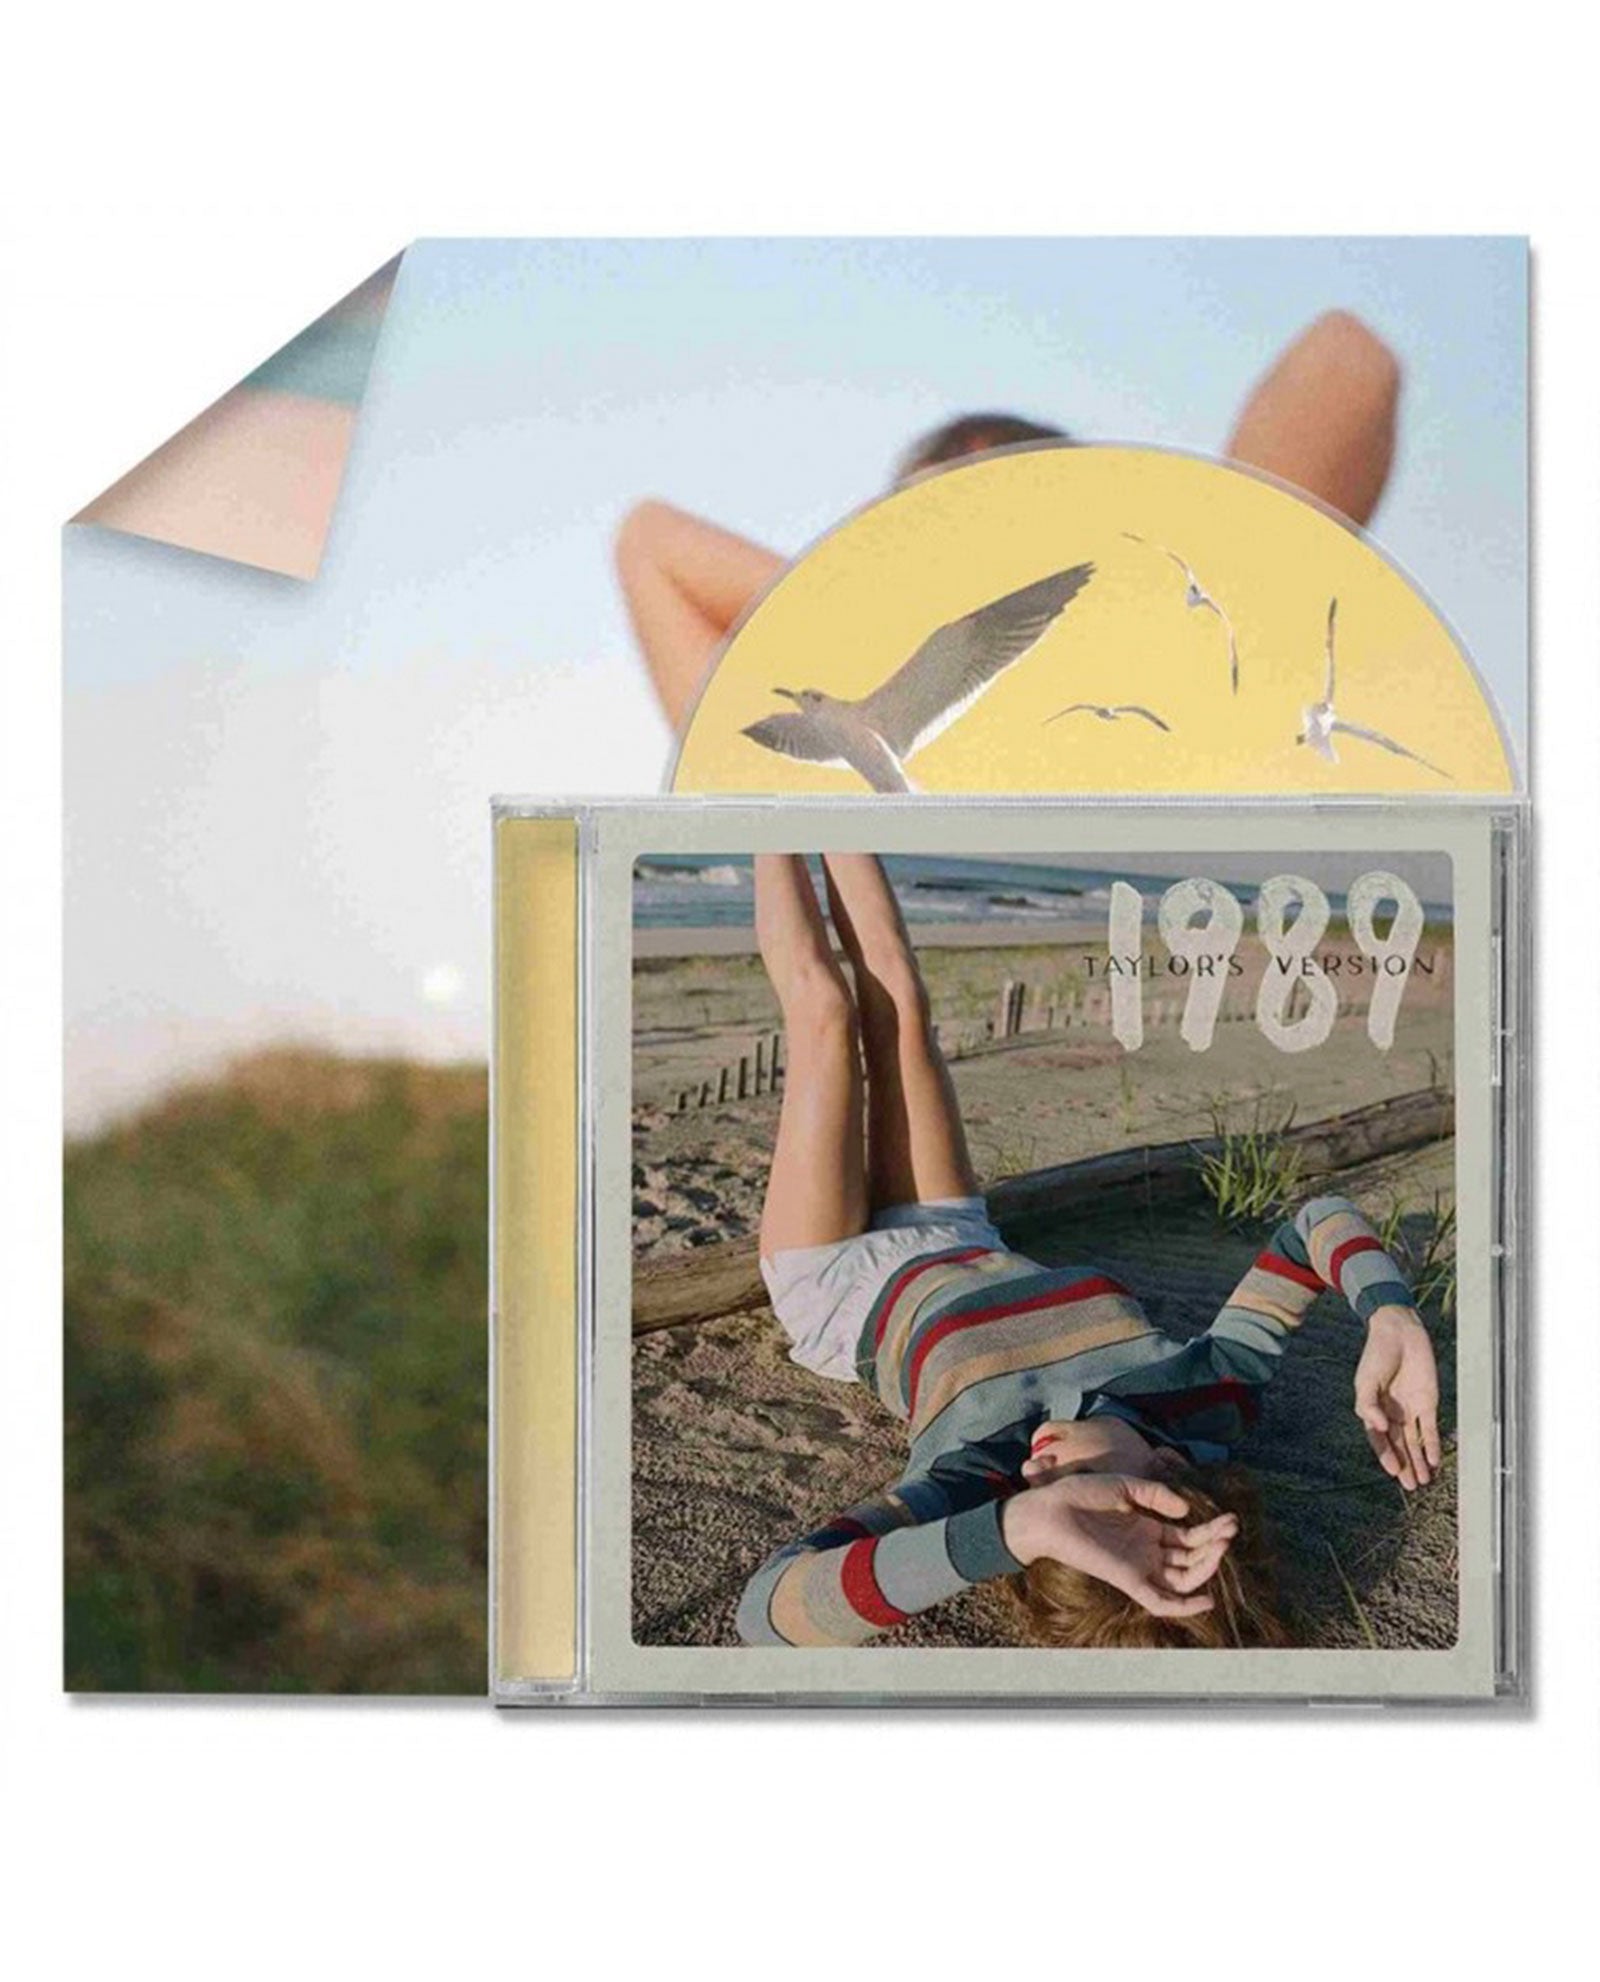 Taylor Swift - CD 1989 (Taylor's version) Sunrise Boulevard Yellow